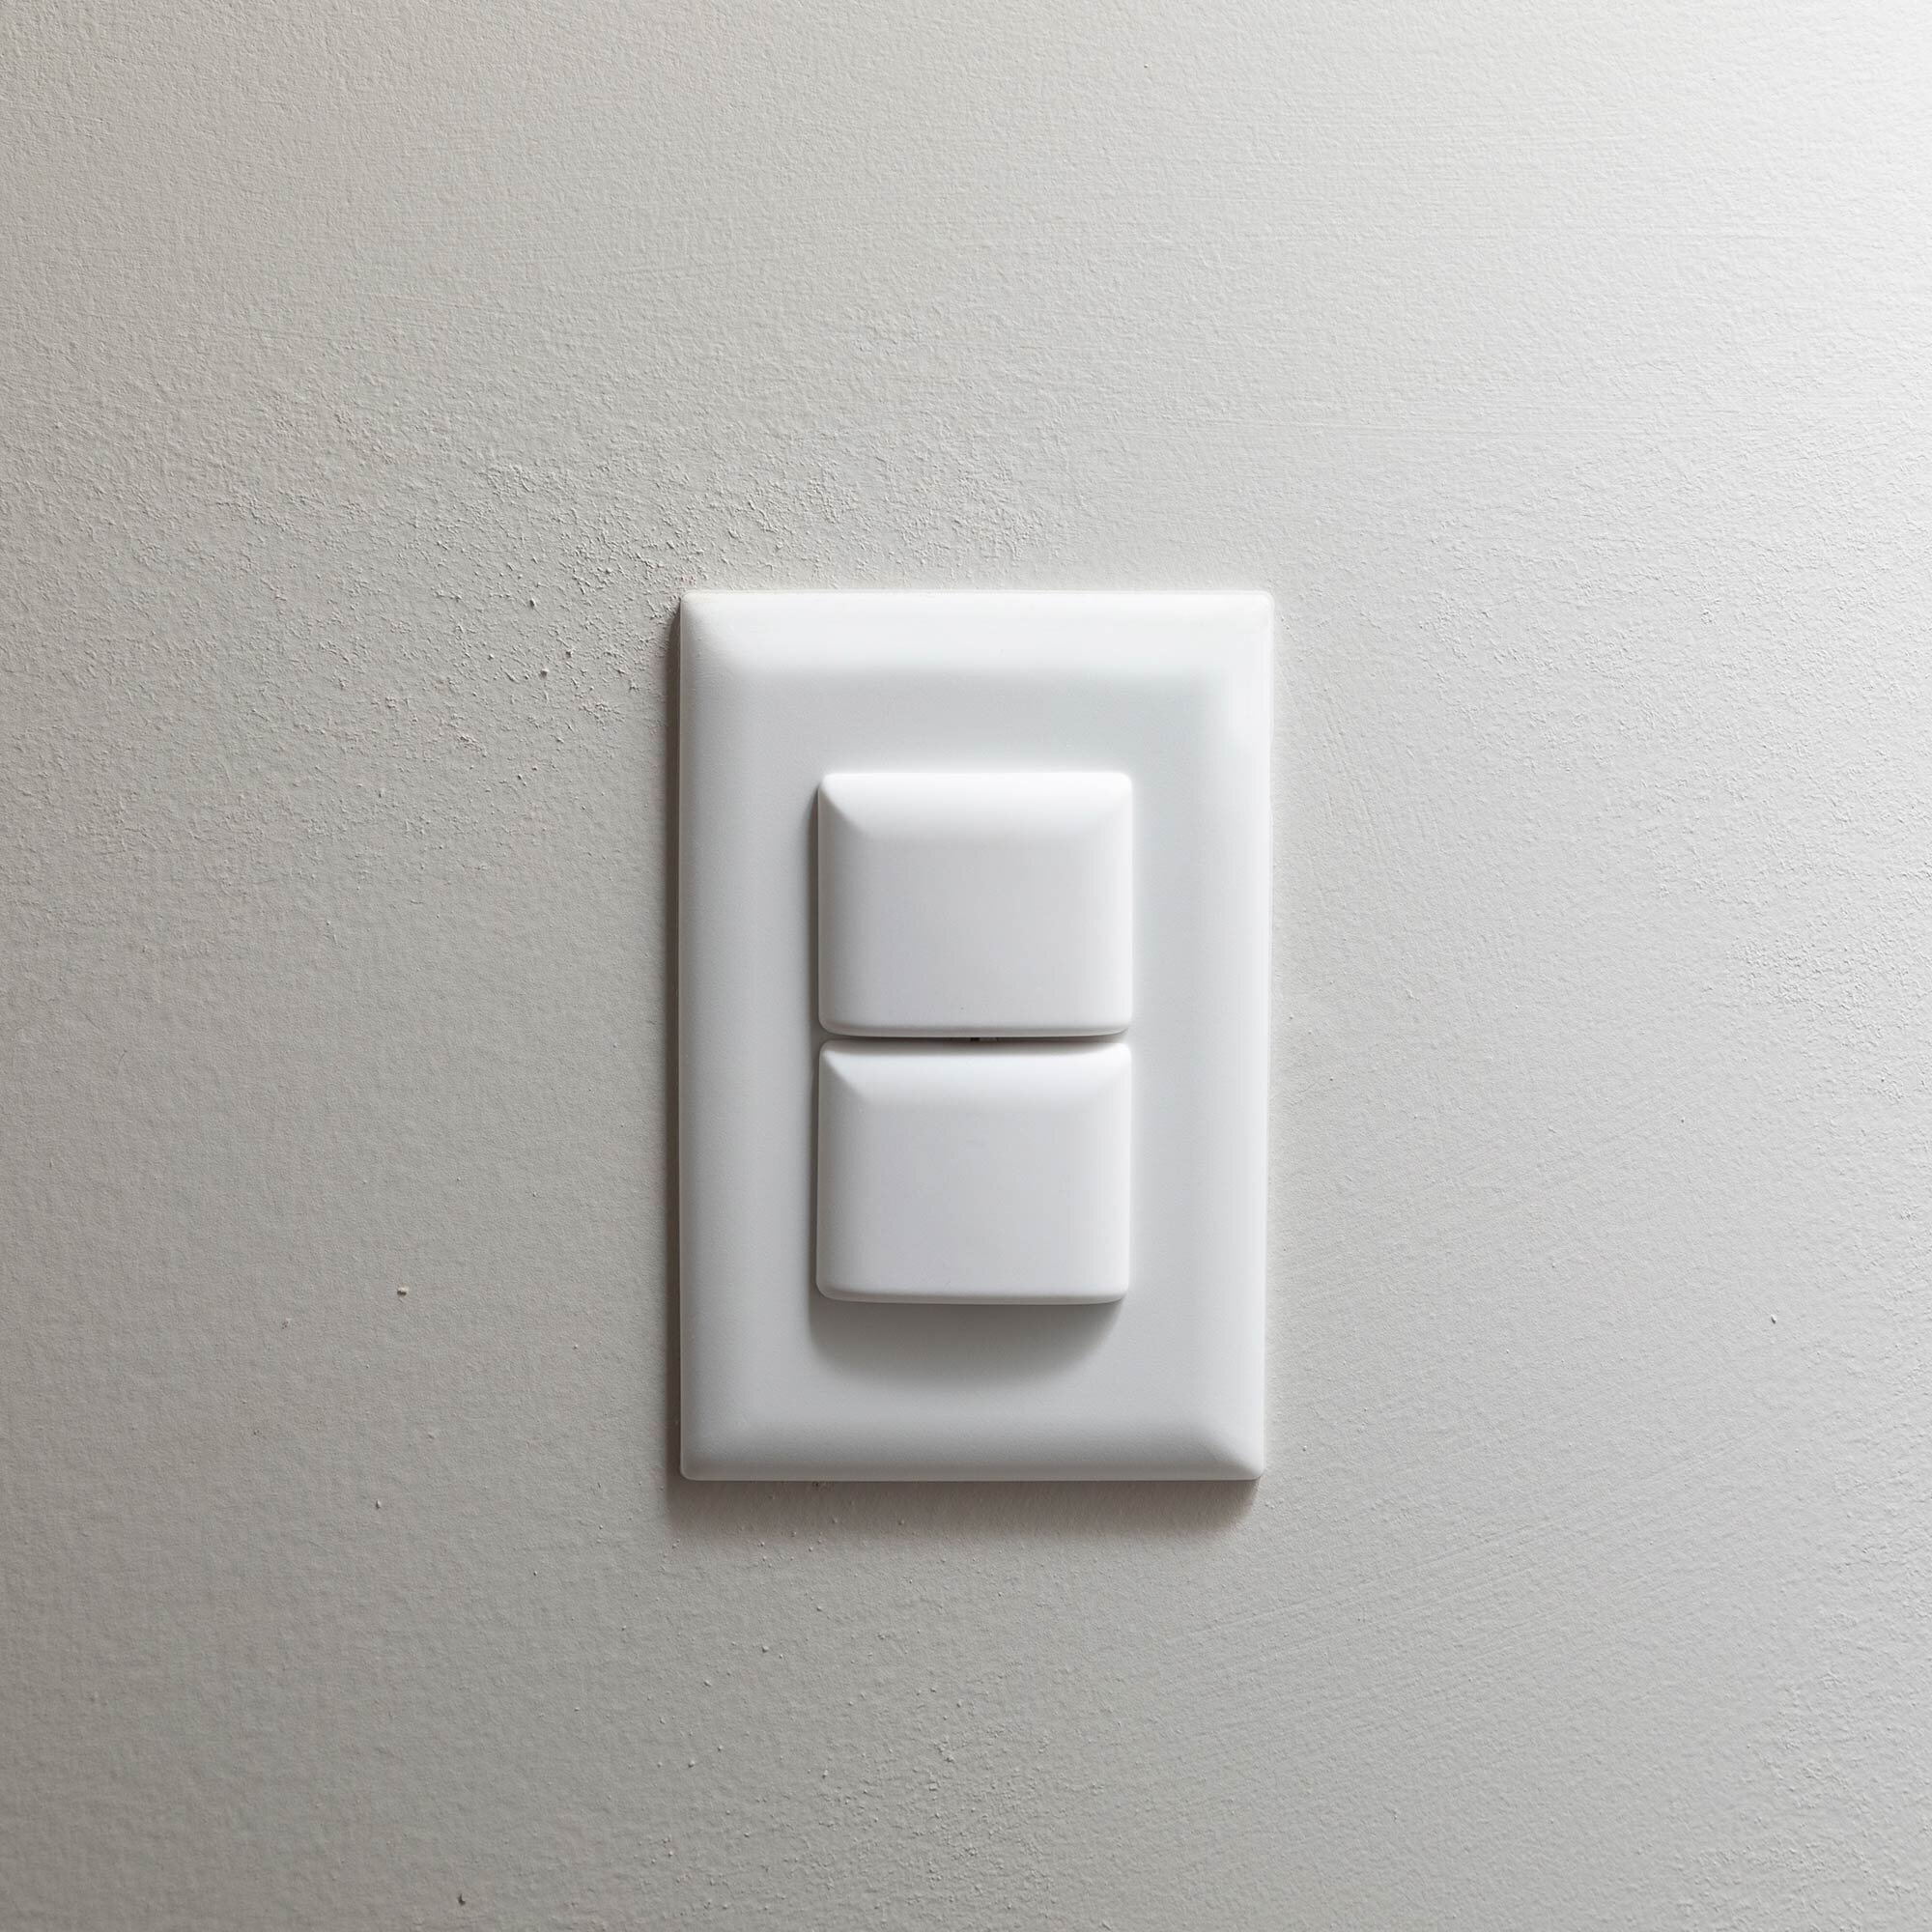 StayPut® Single Outlet Plug on both outlets